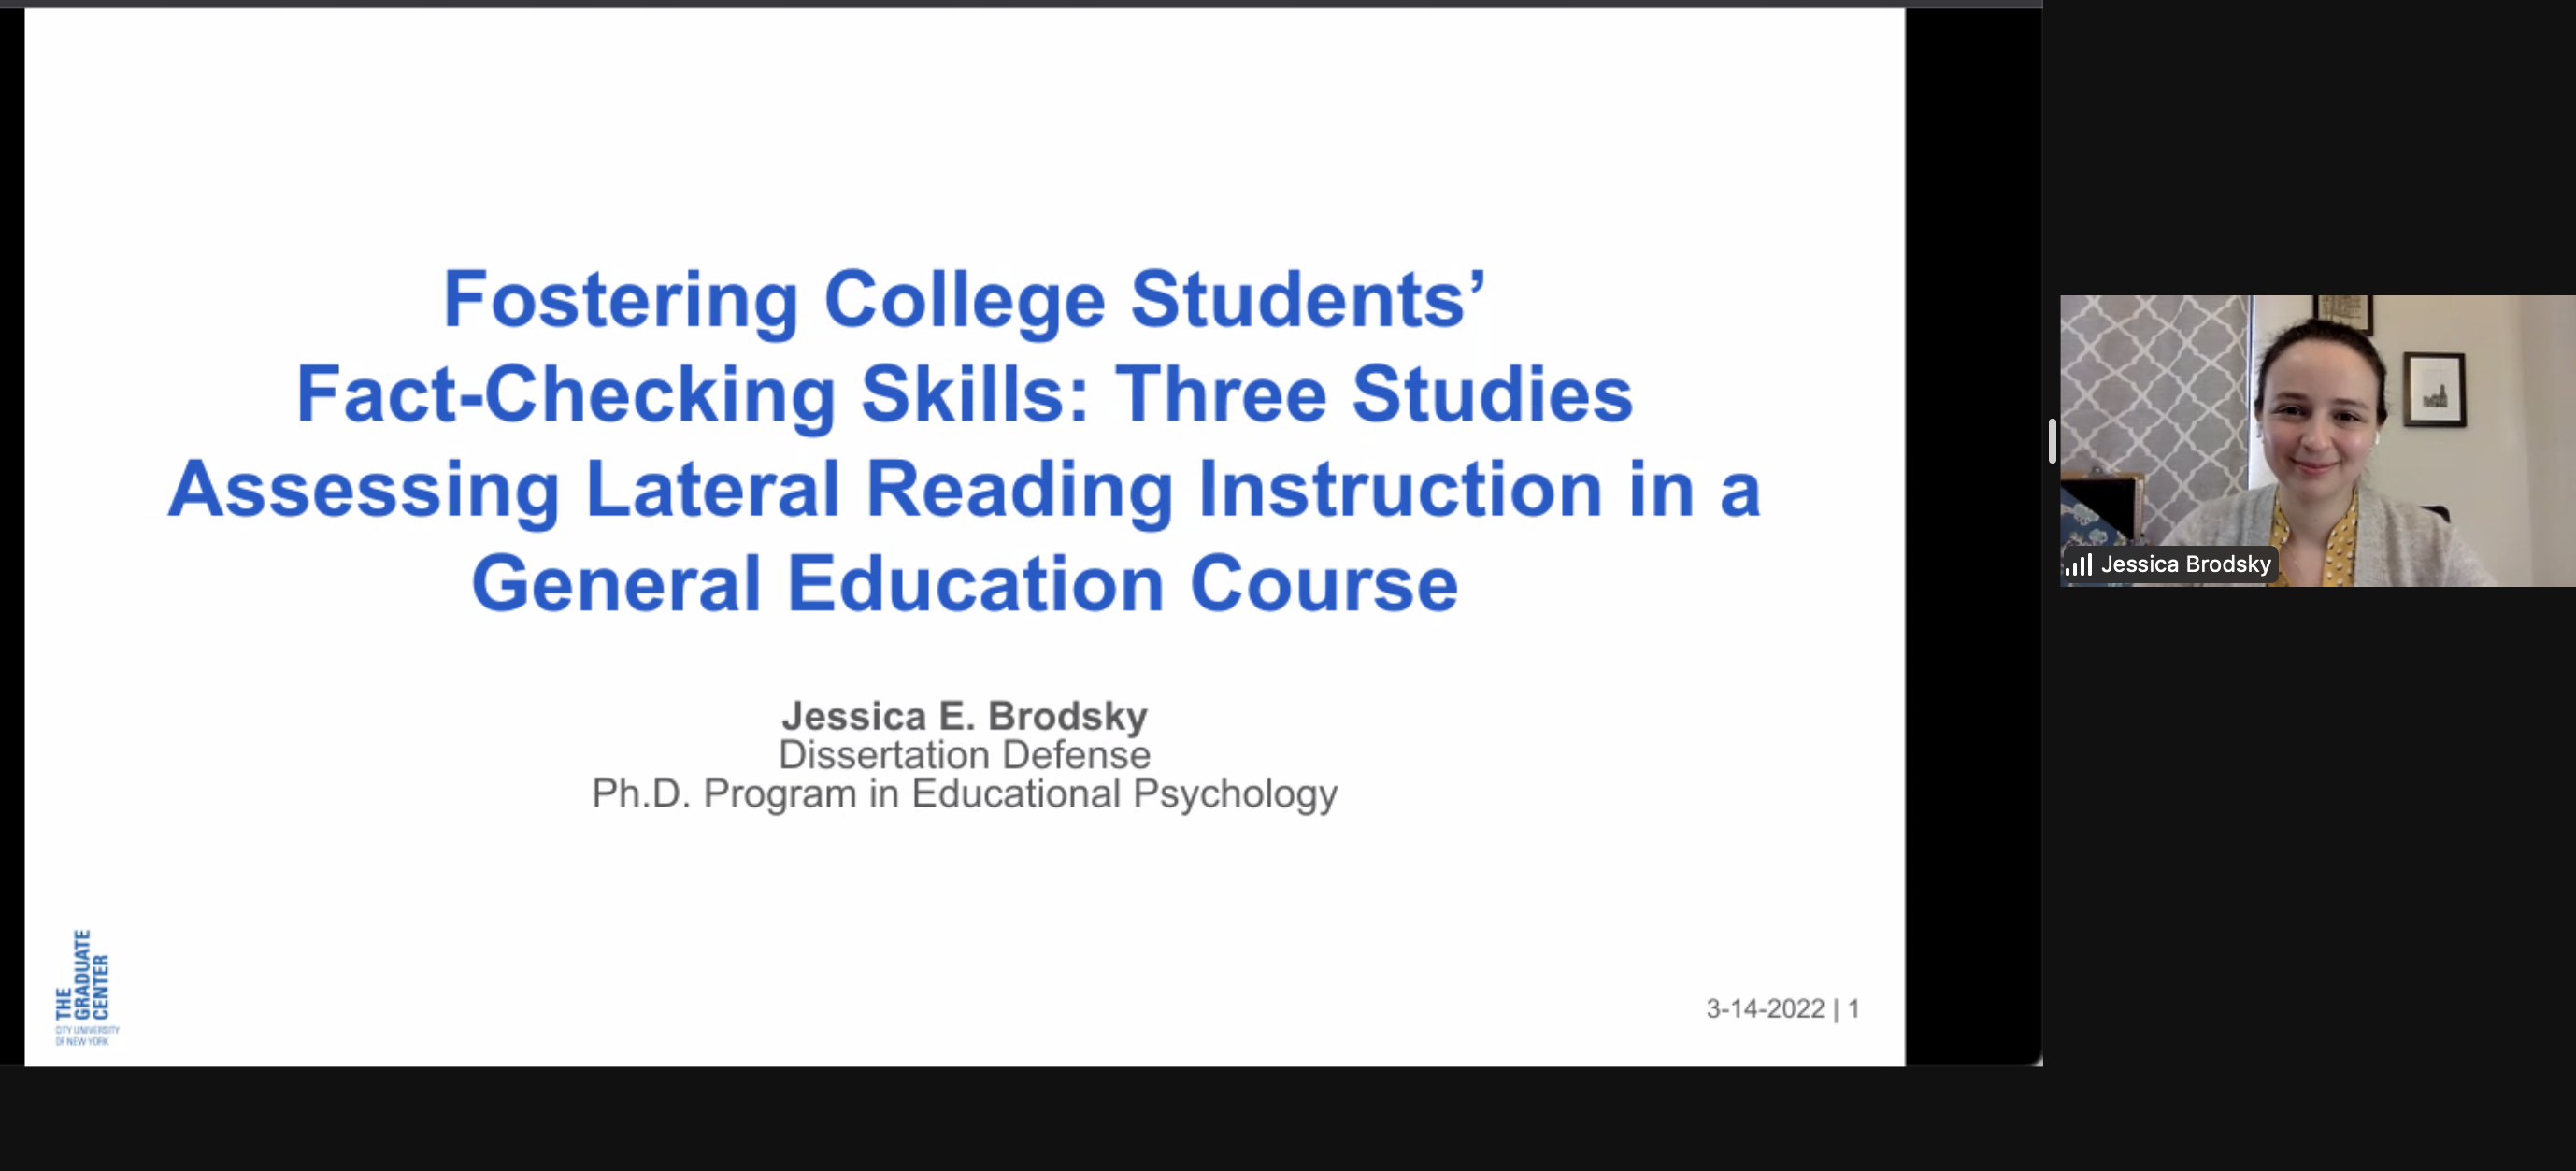 Jessica Brodsky presenting her dissertation